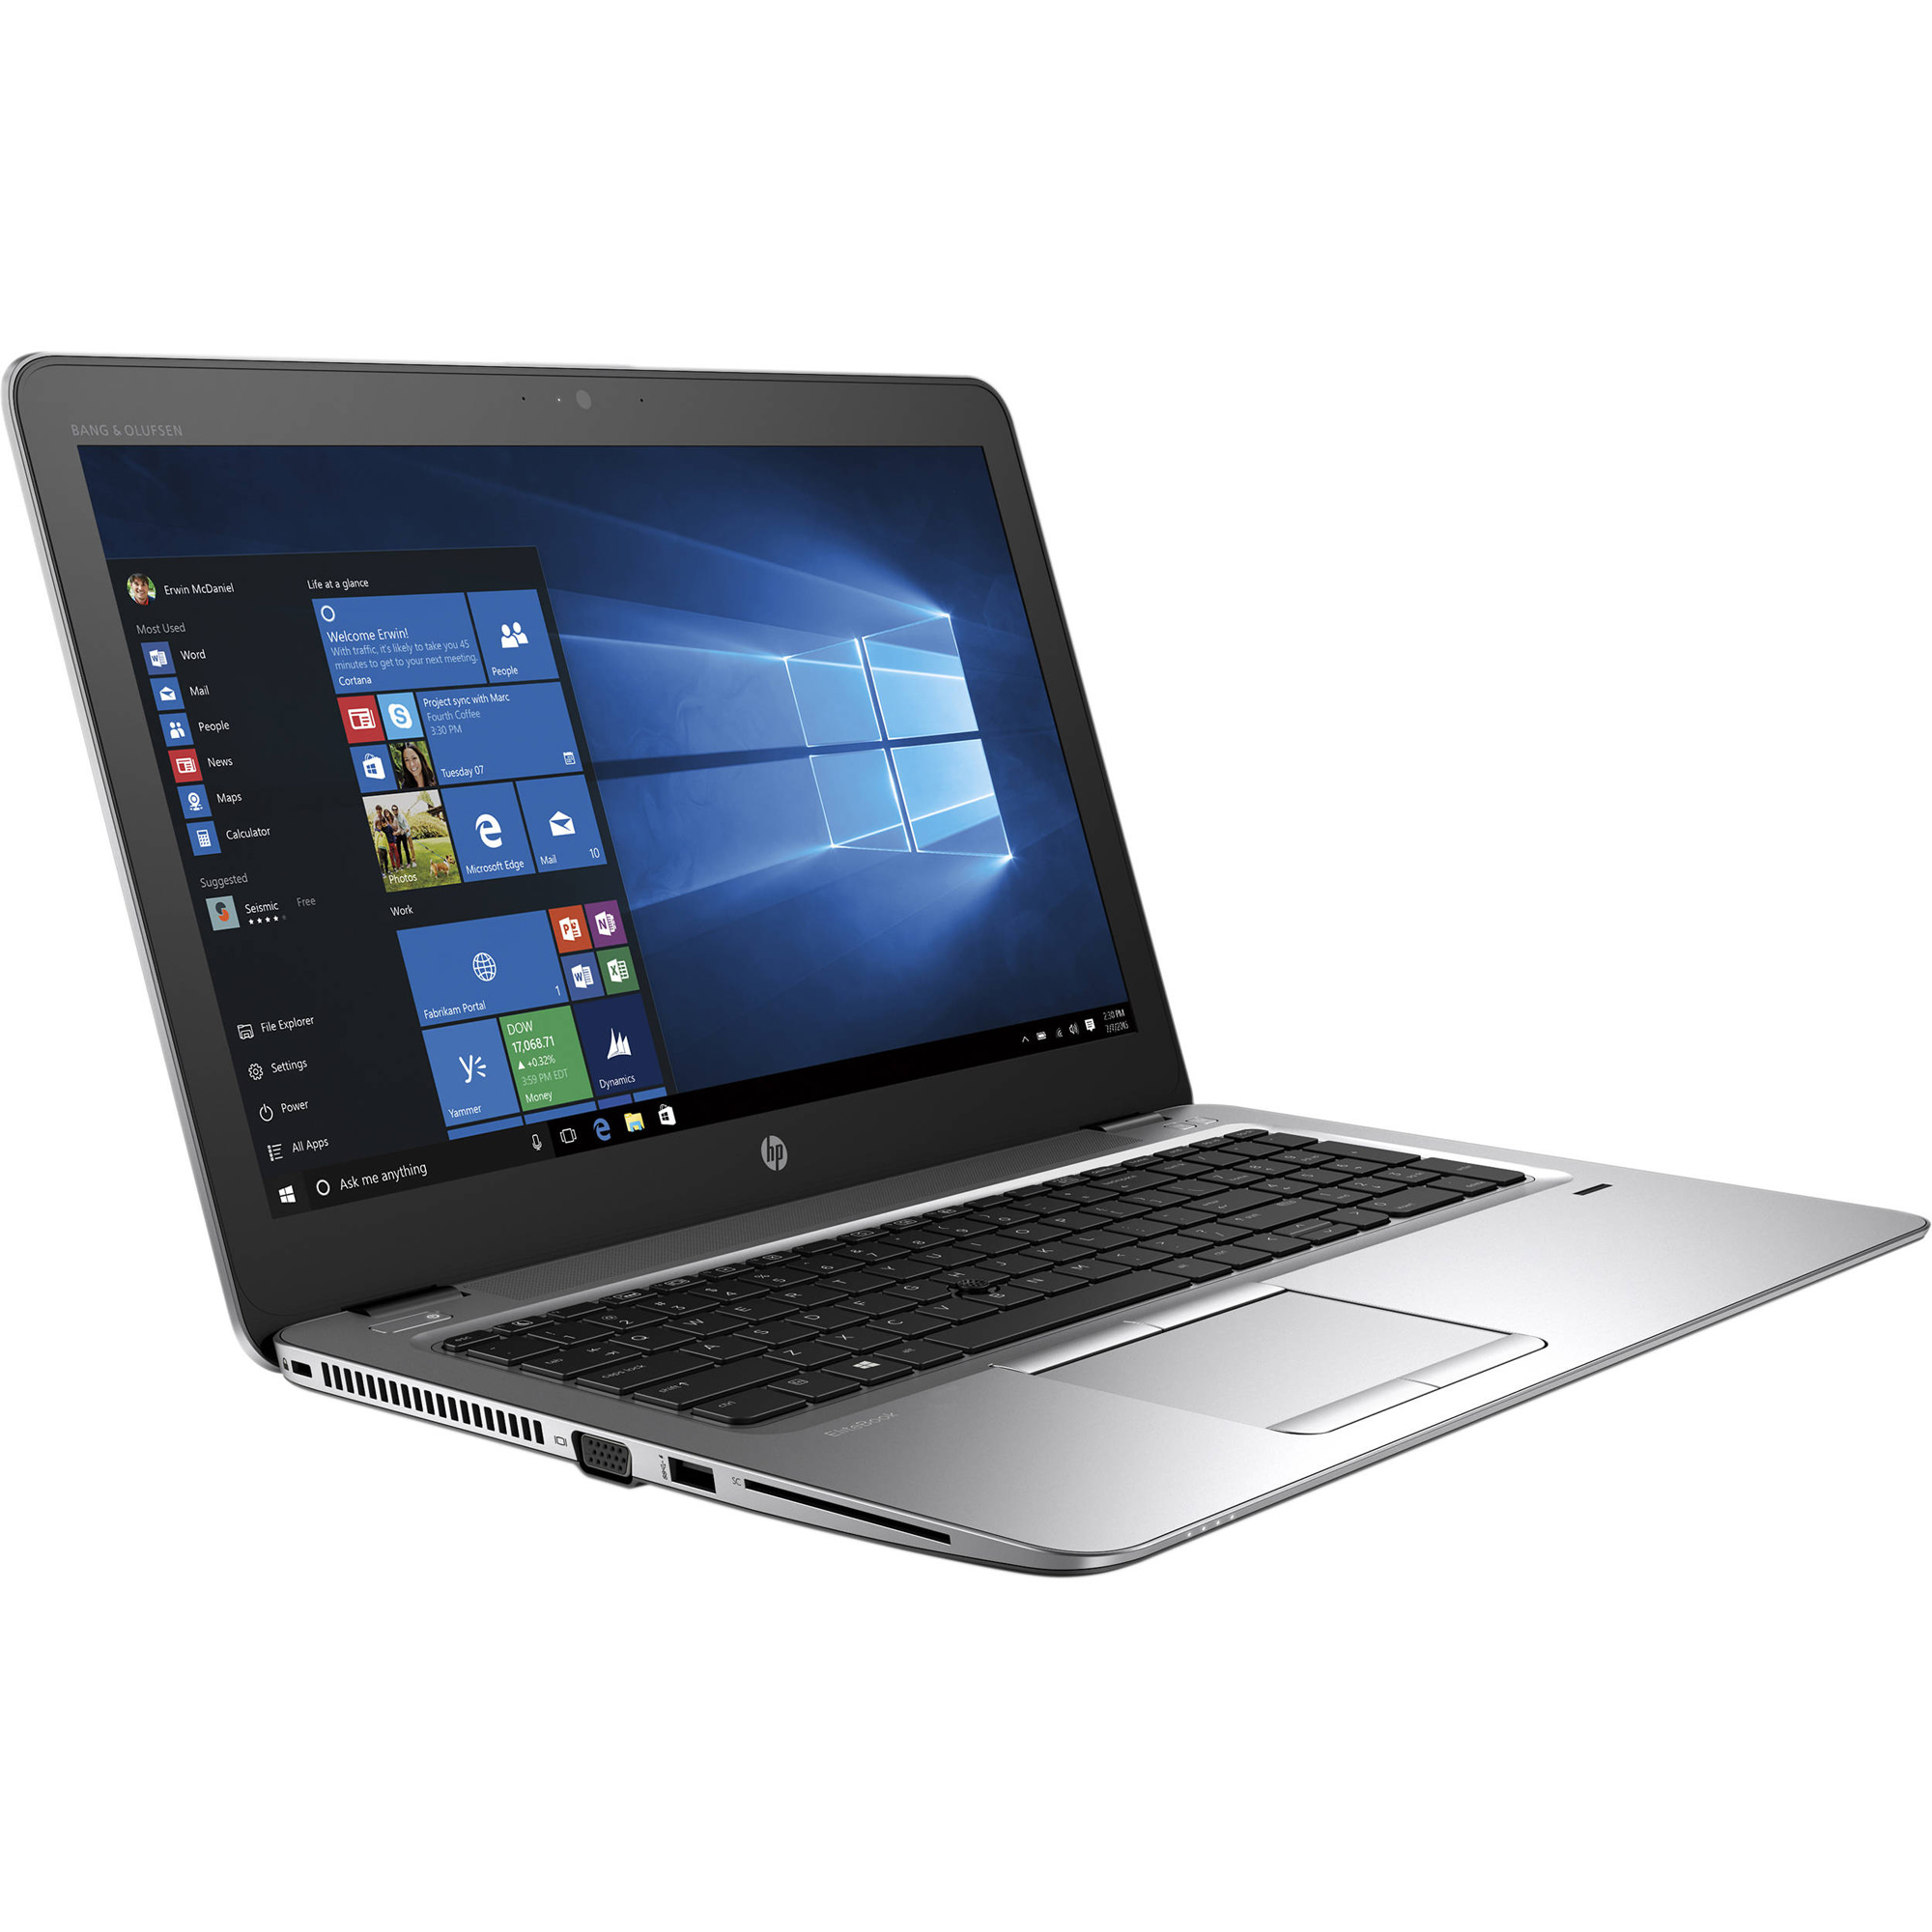 HP EliteBook 850 G4 Notebook PC (ENERGY STAR) (1BS52UT) 15.6in 256GB/8GB/8GB 2.7GHz Windows 10 Pro 64 Intel HD Graphics 620 - image 2 of 4